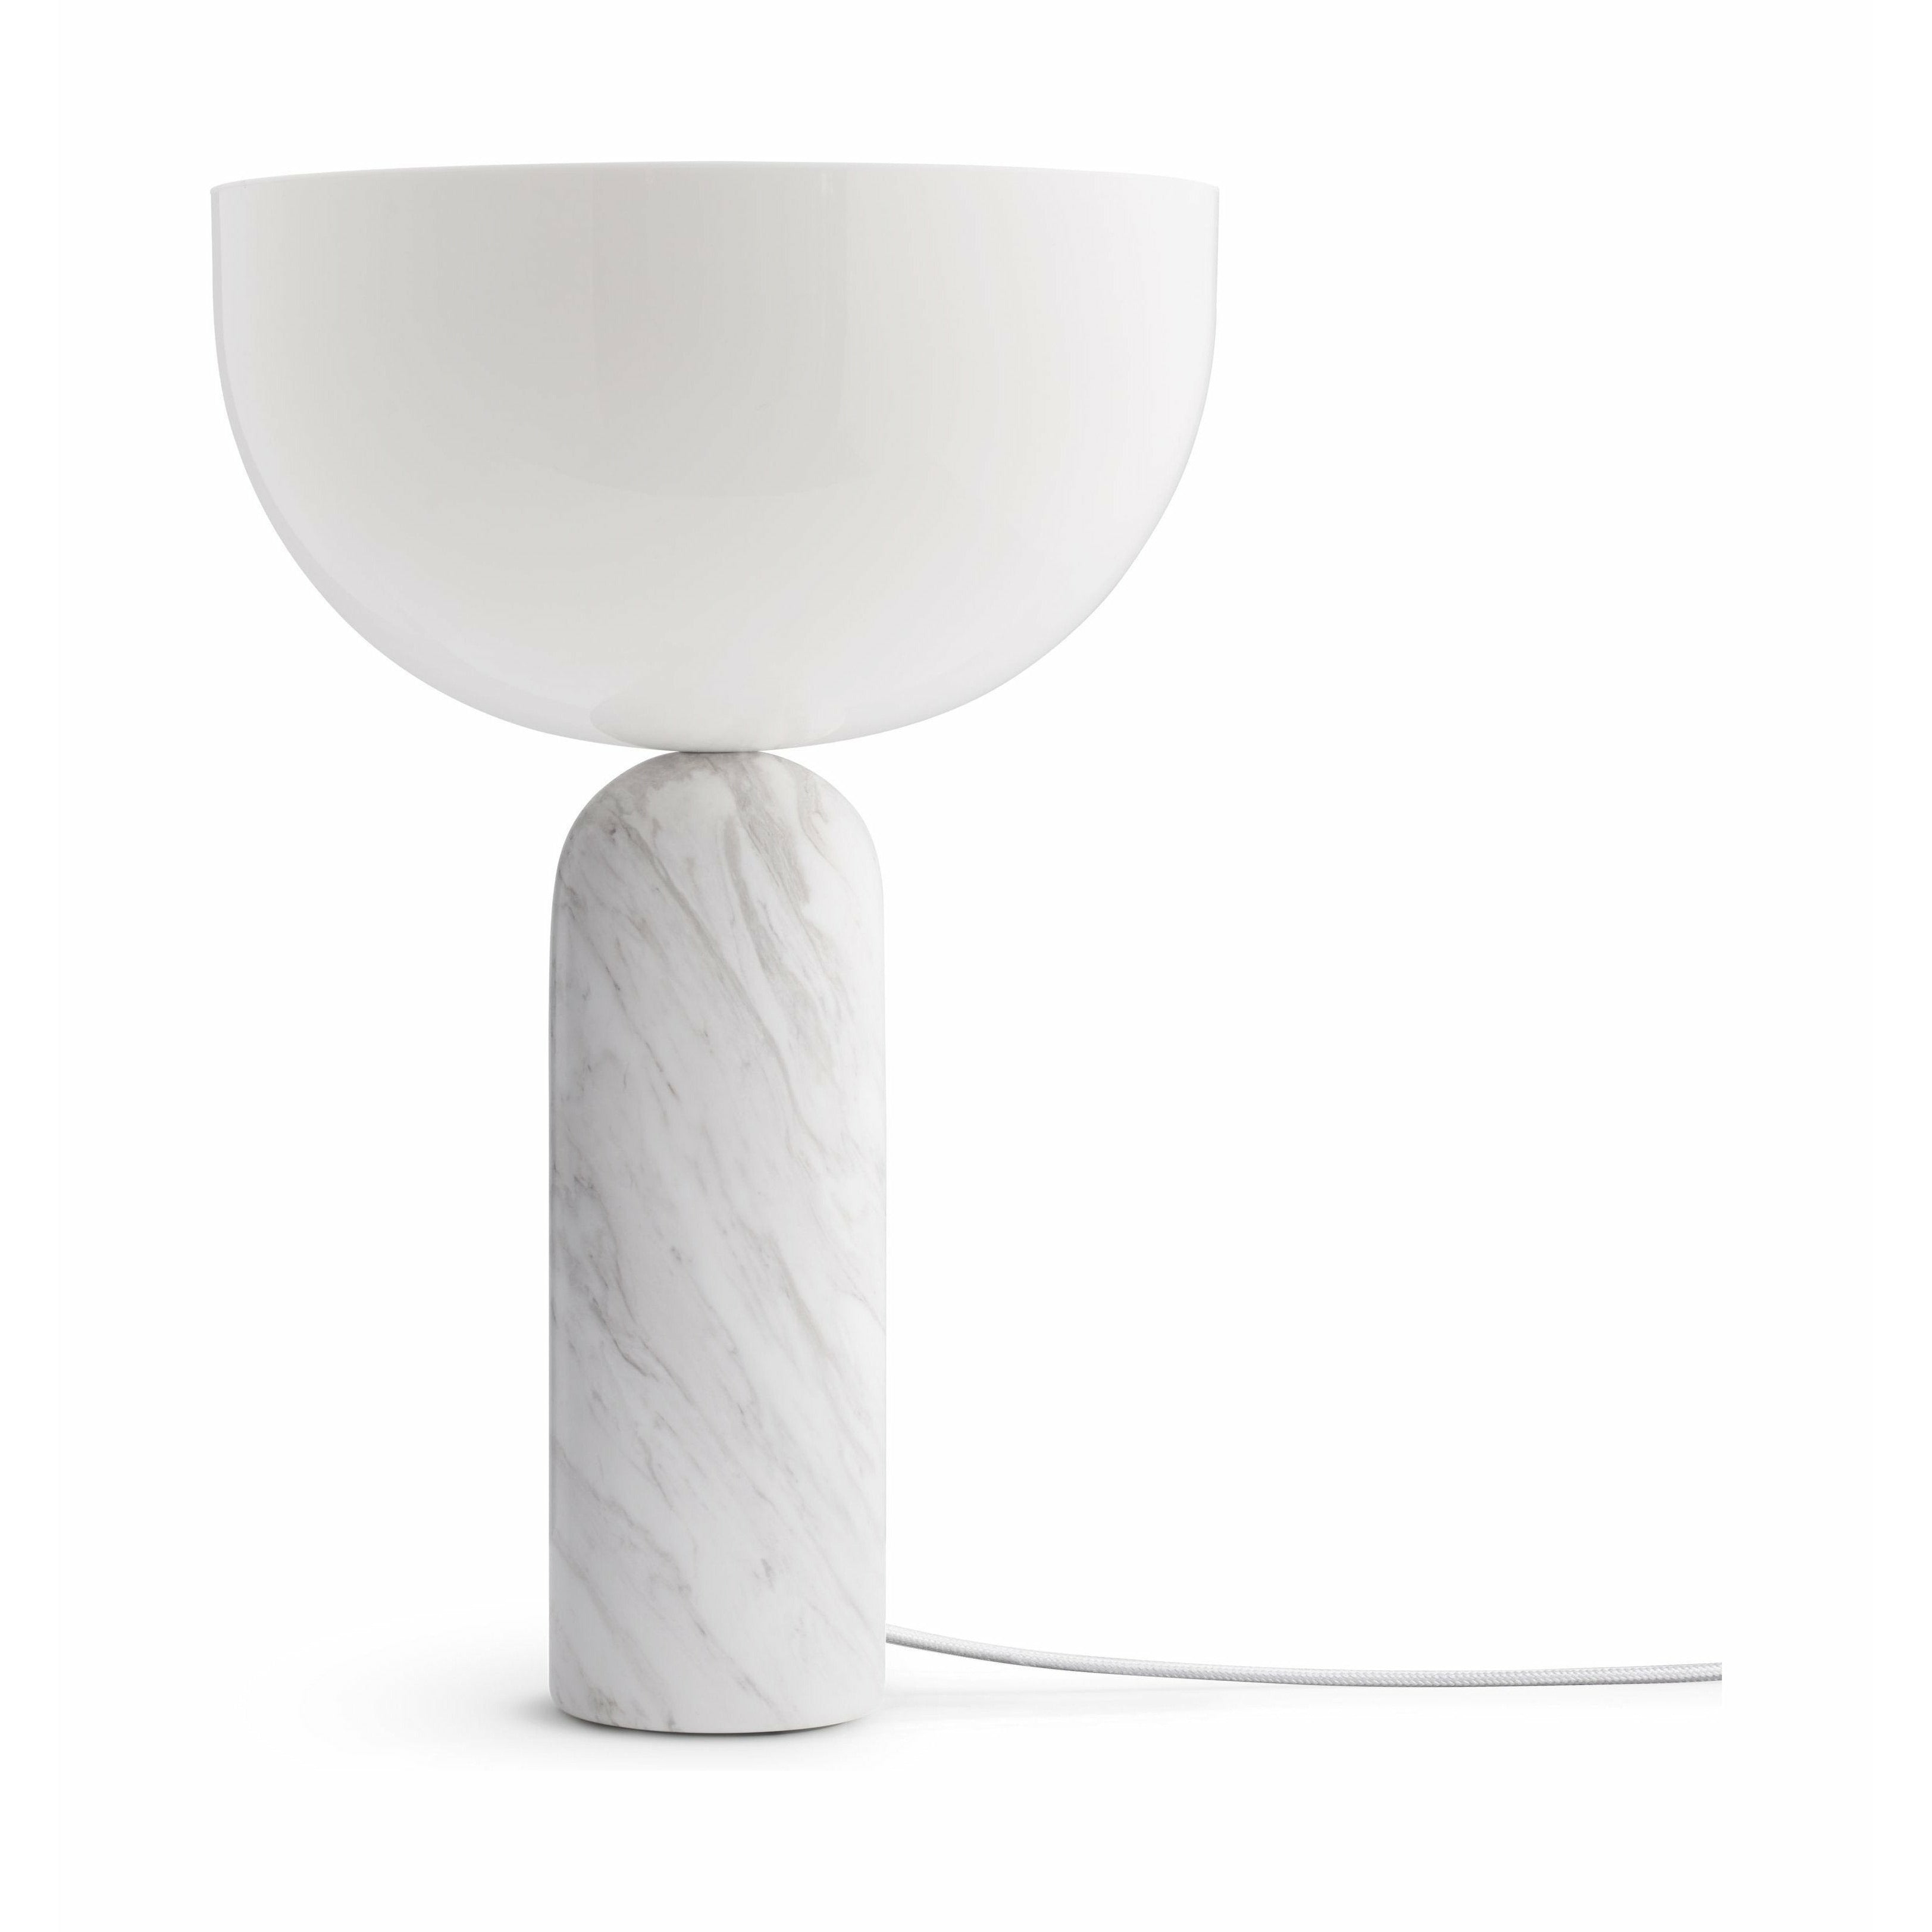 New Works Kizu bordslampa vit carrara marmor, stor